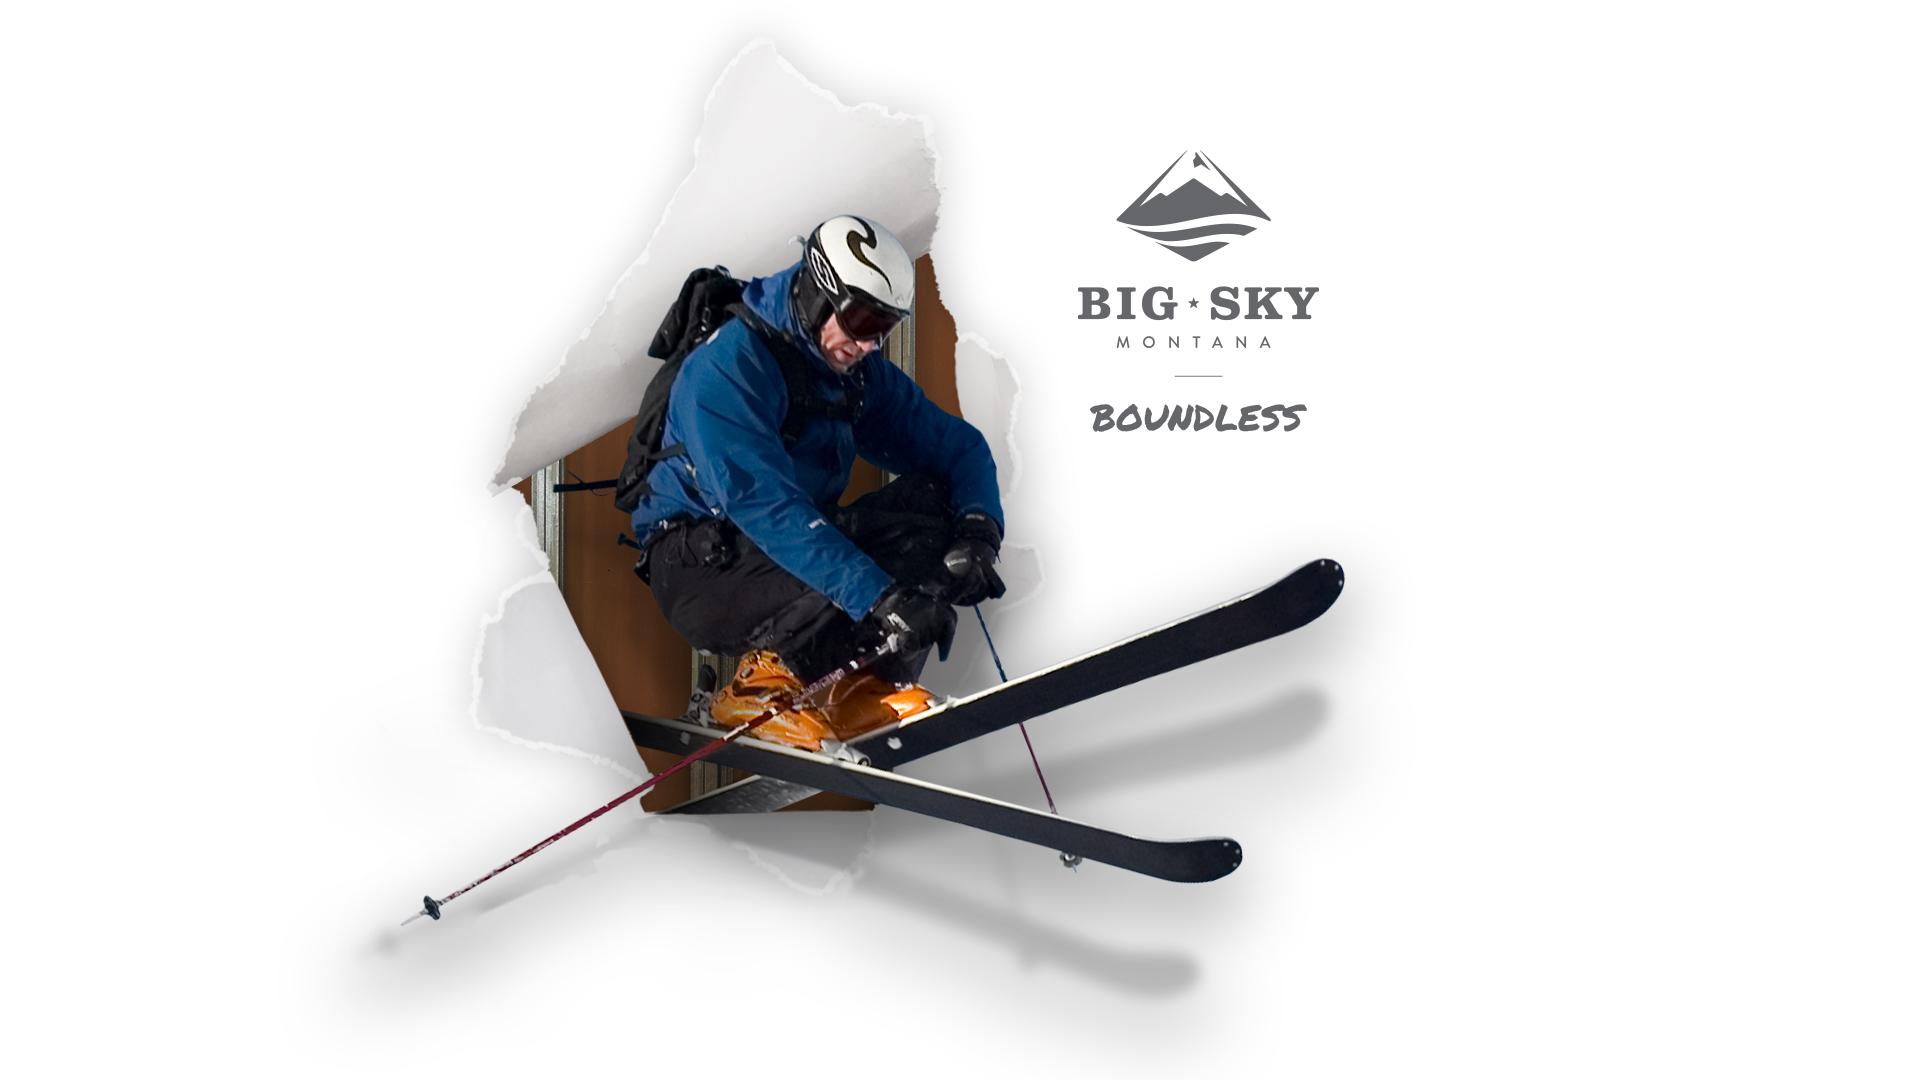 Bigsky logo and tagline next to a pro skier bursting through white paper